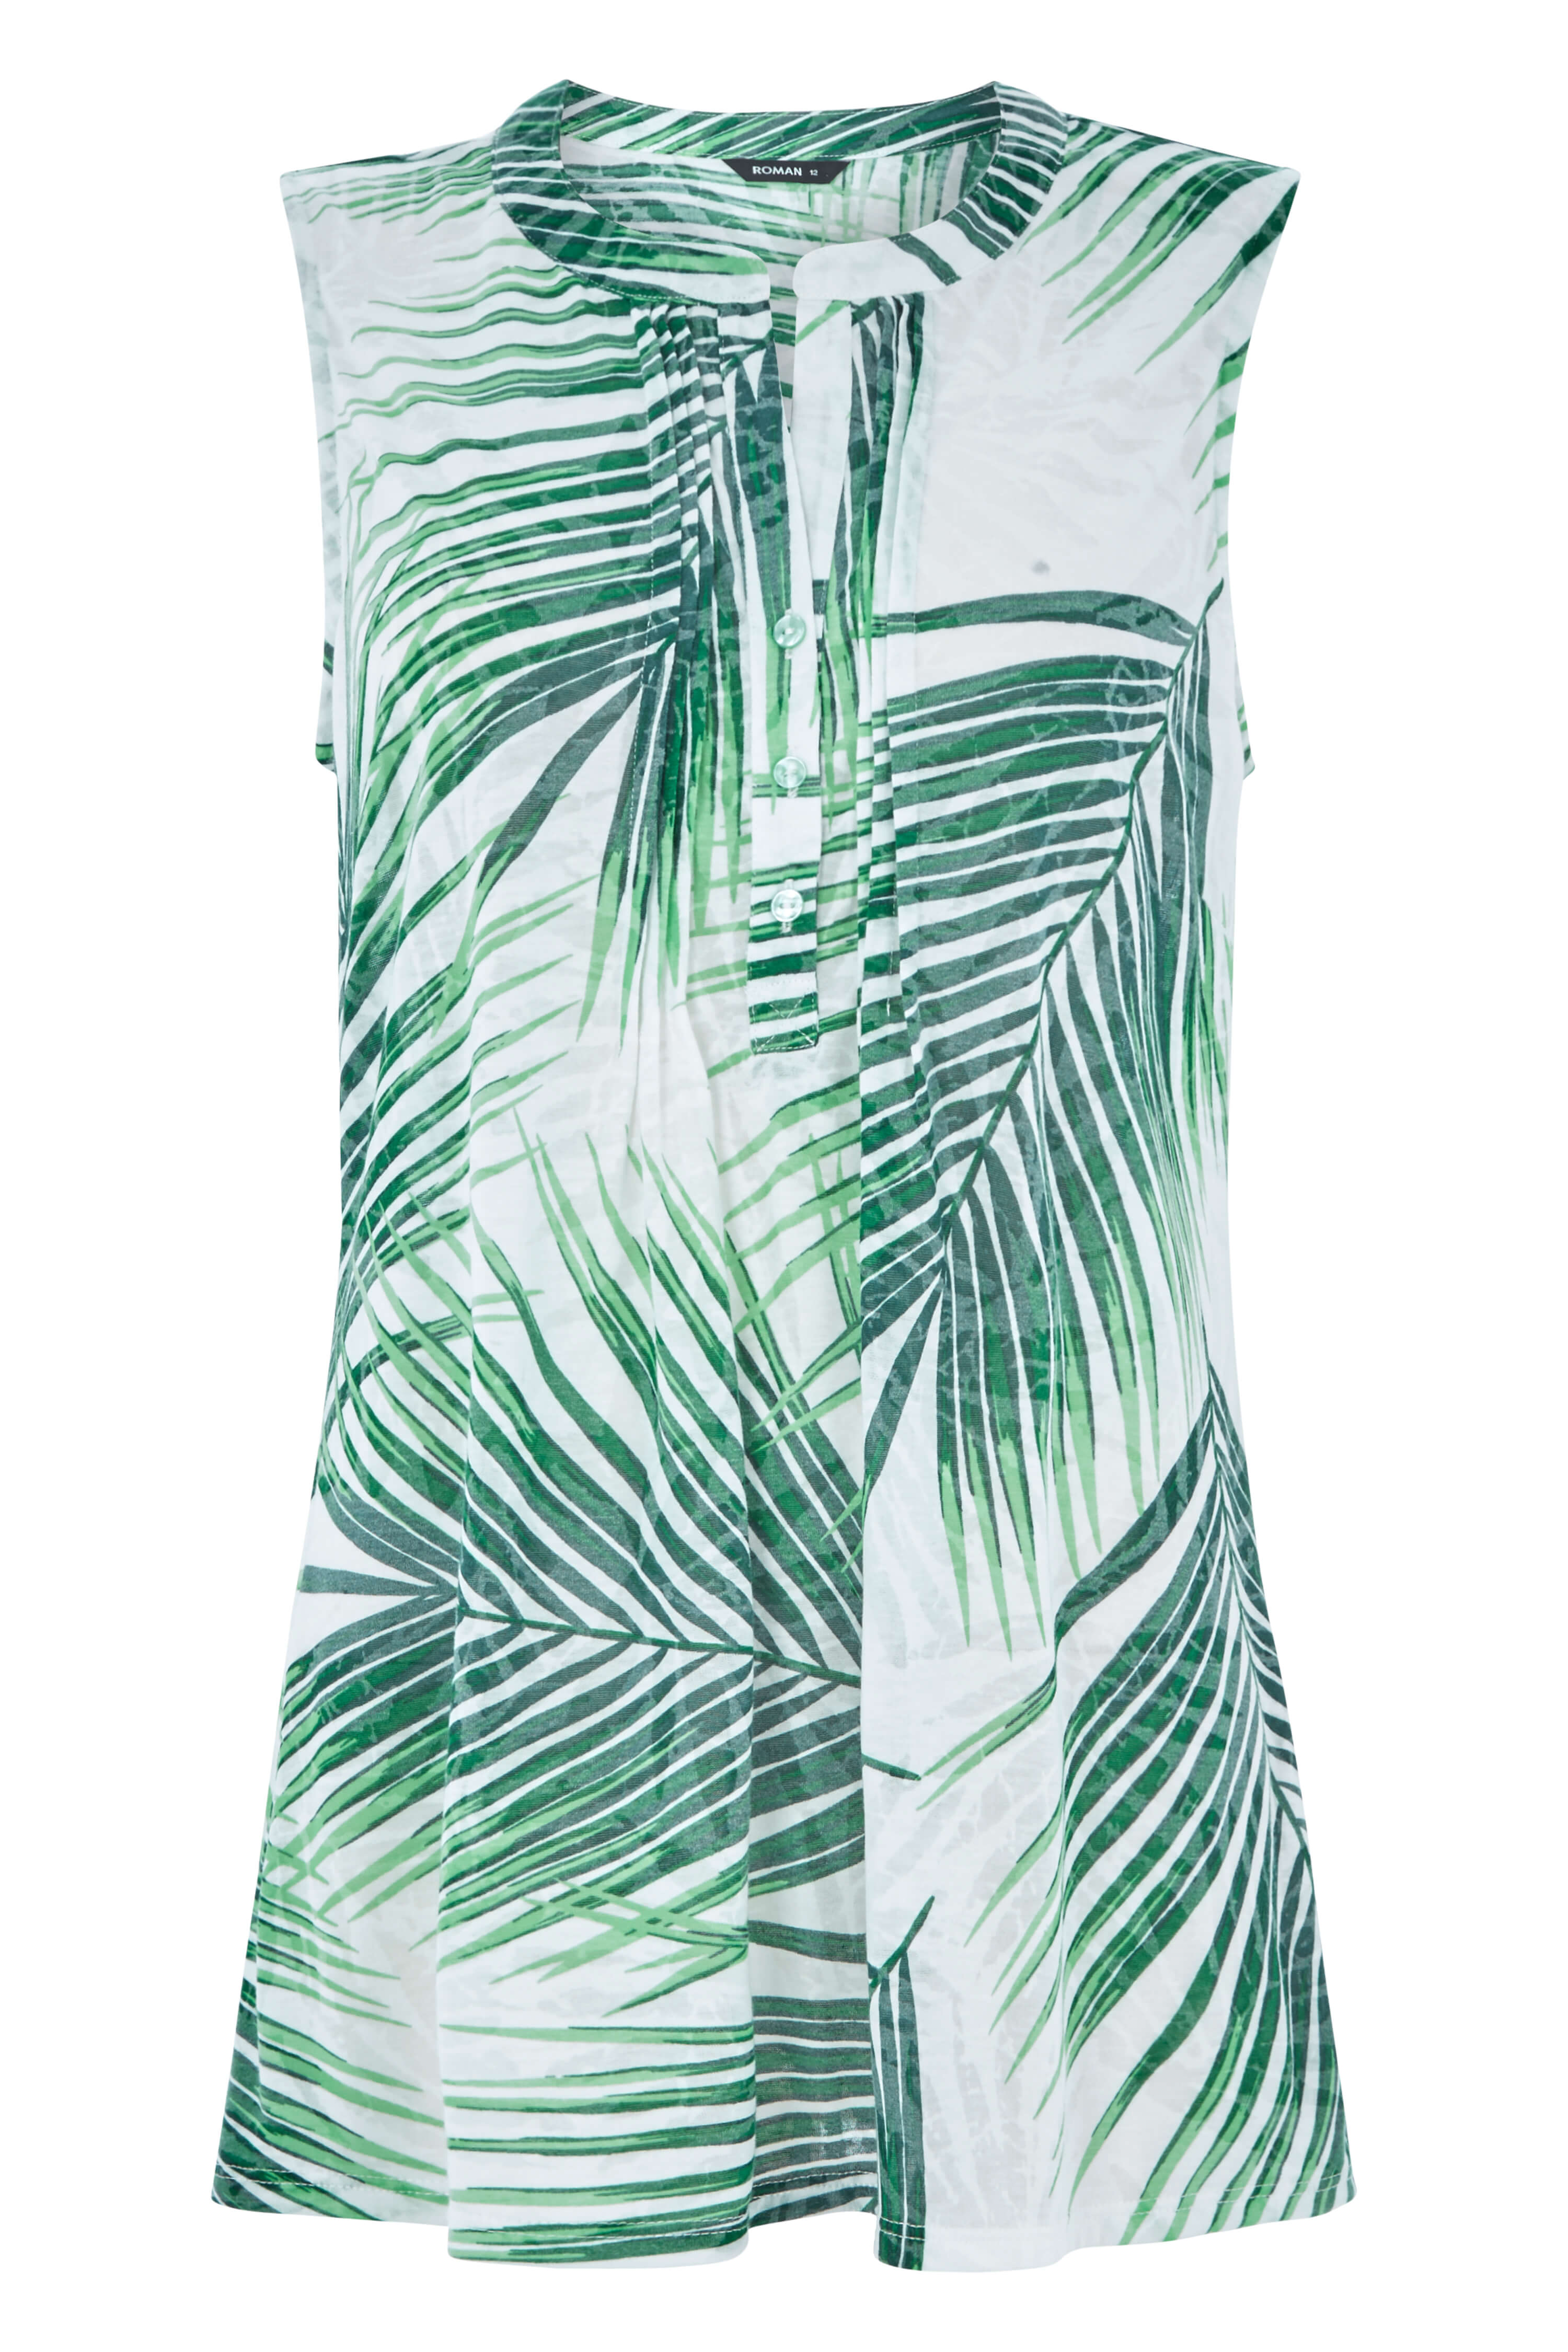 Palm Print Jersey Top in Emerald - Roman Originals UK